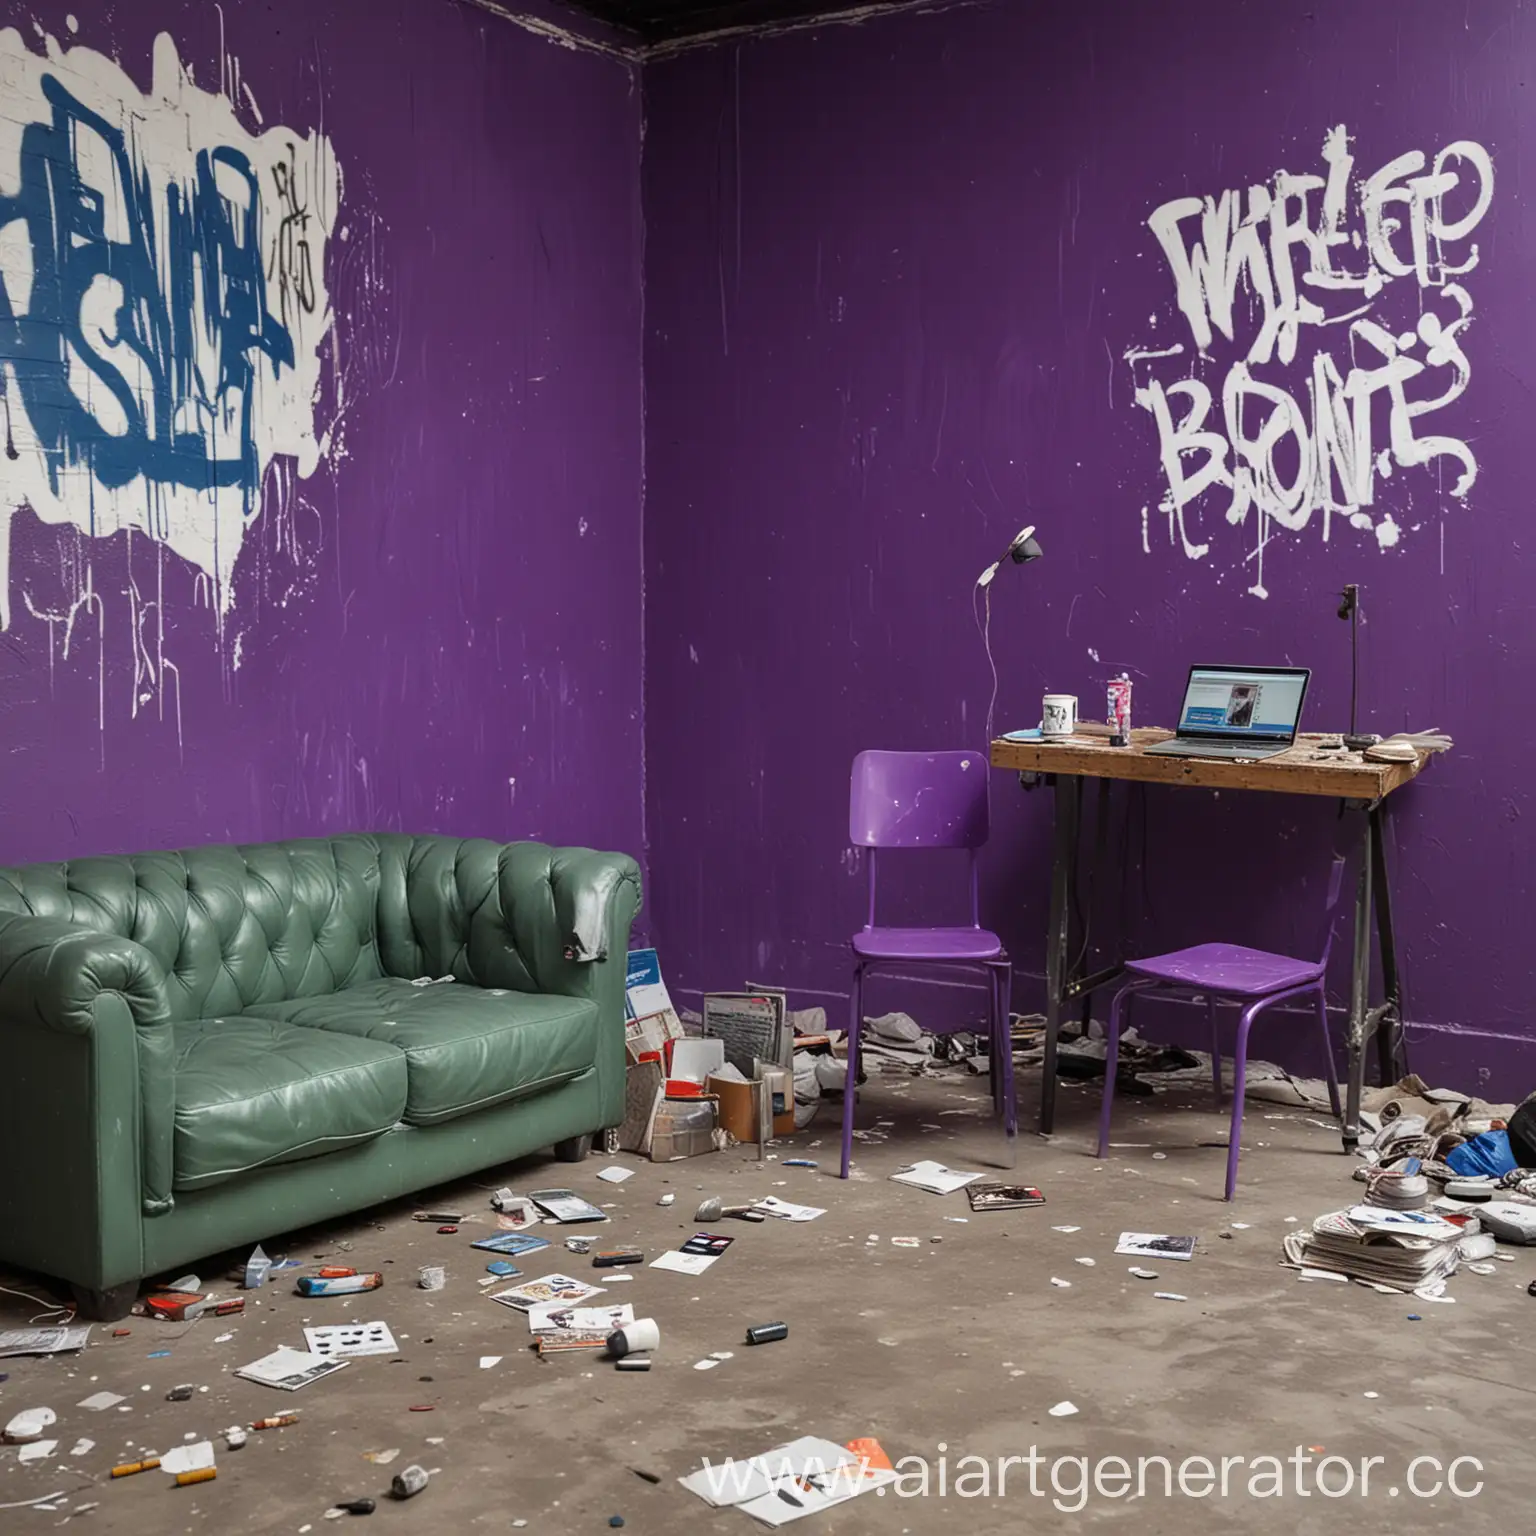 Urban-Home-Studio-Setup-with-Graffiti-Wall-and-HoodieWearing-Figure